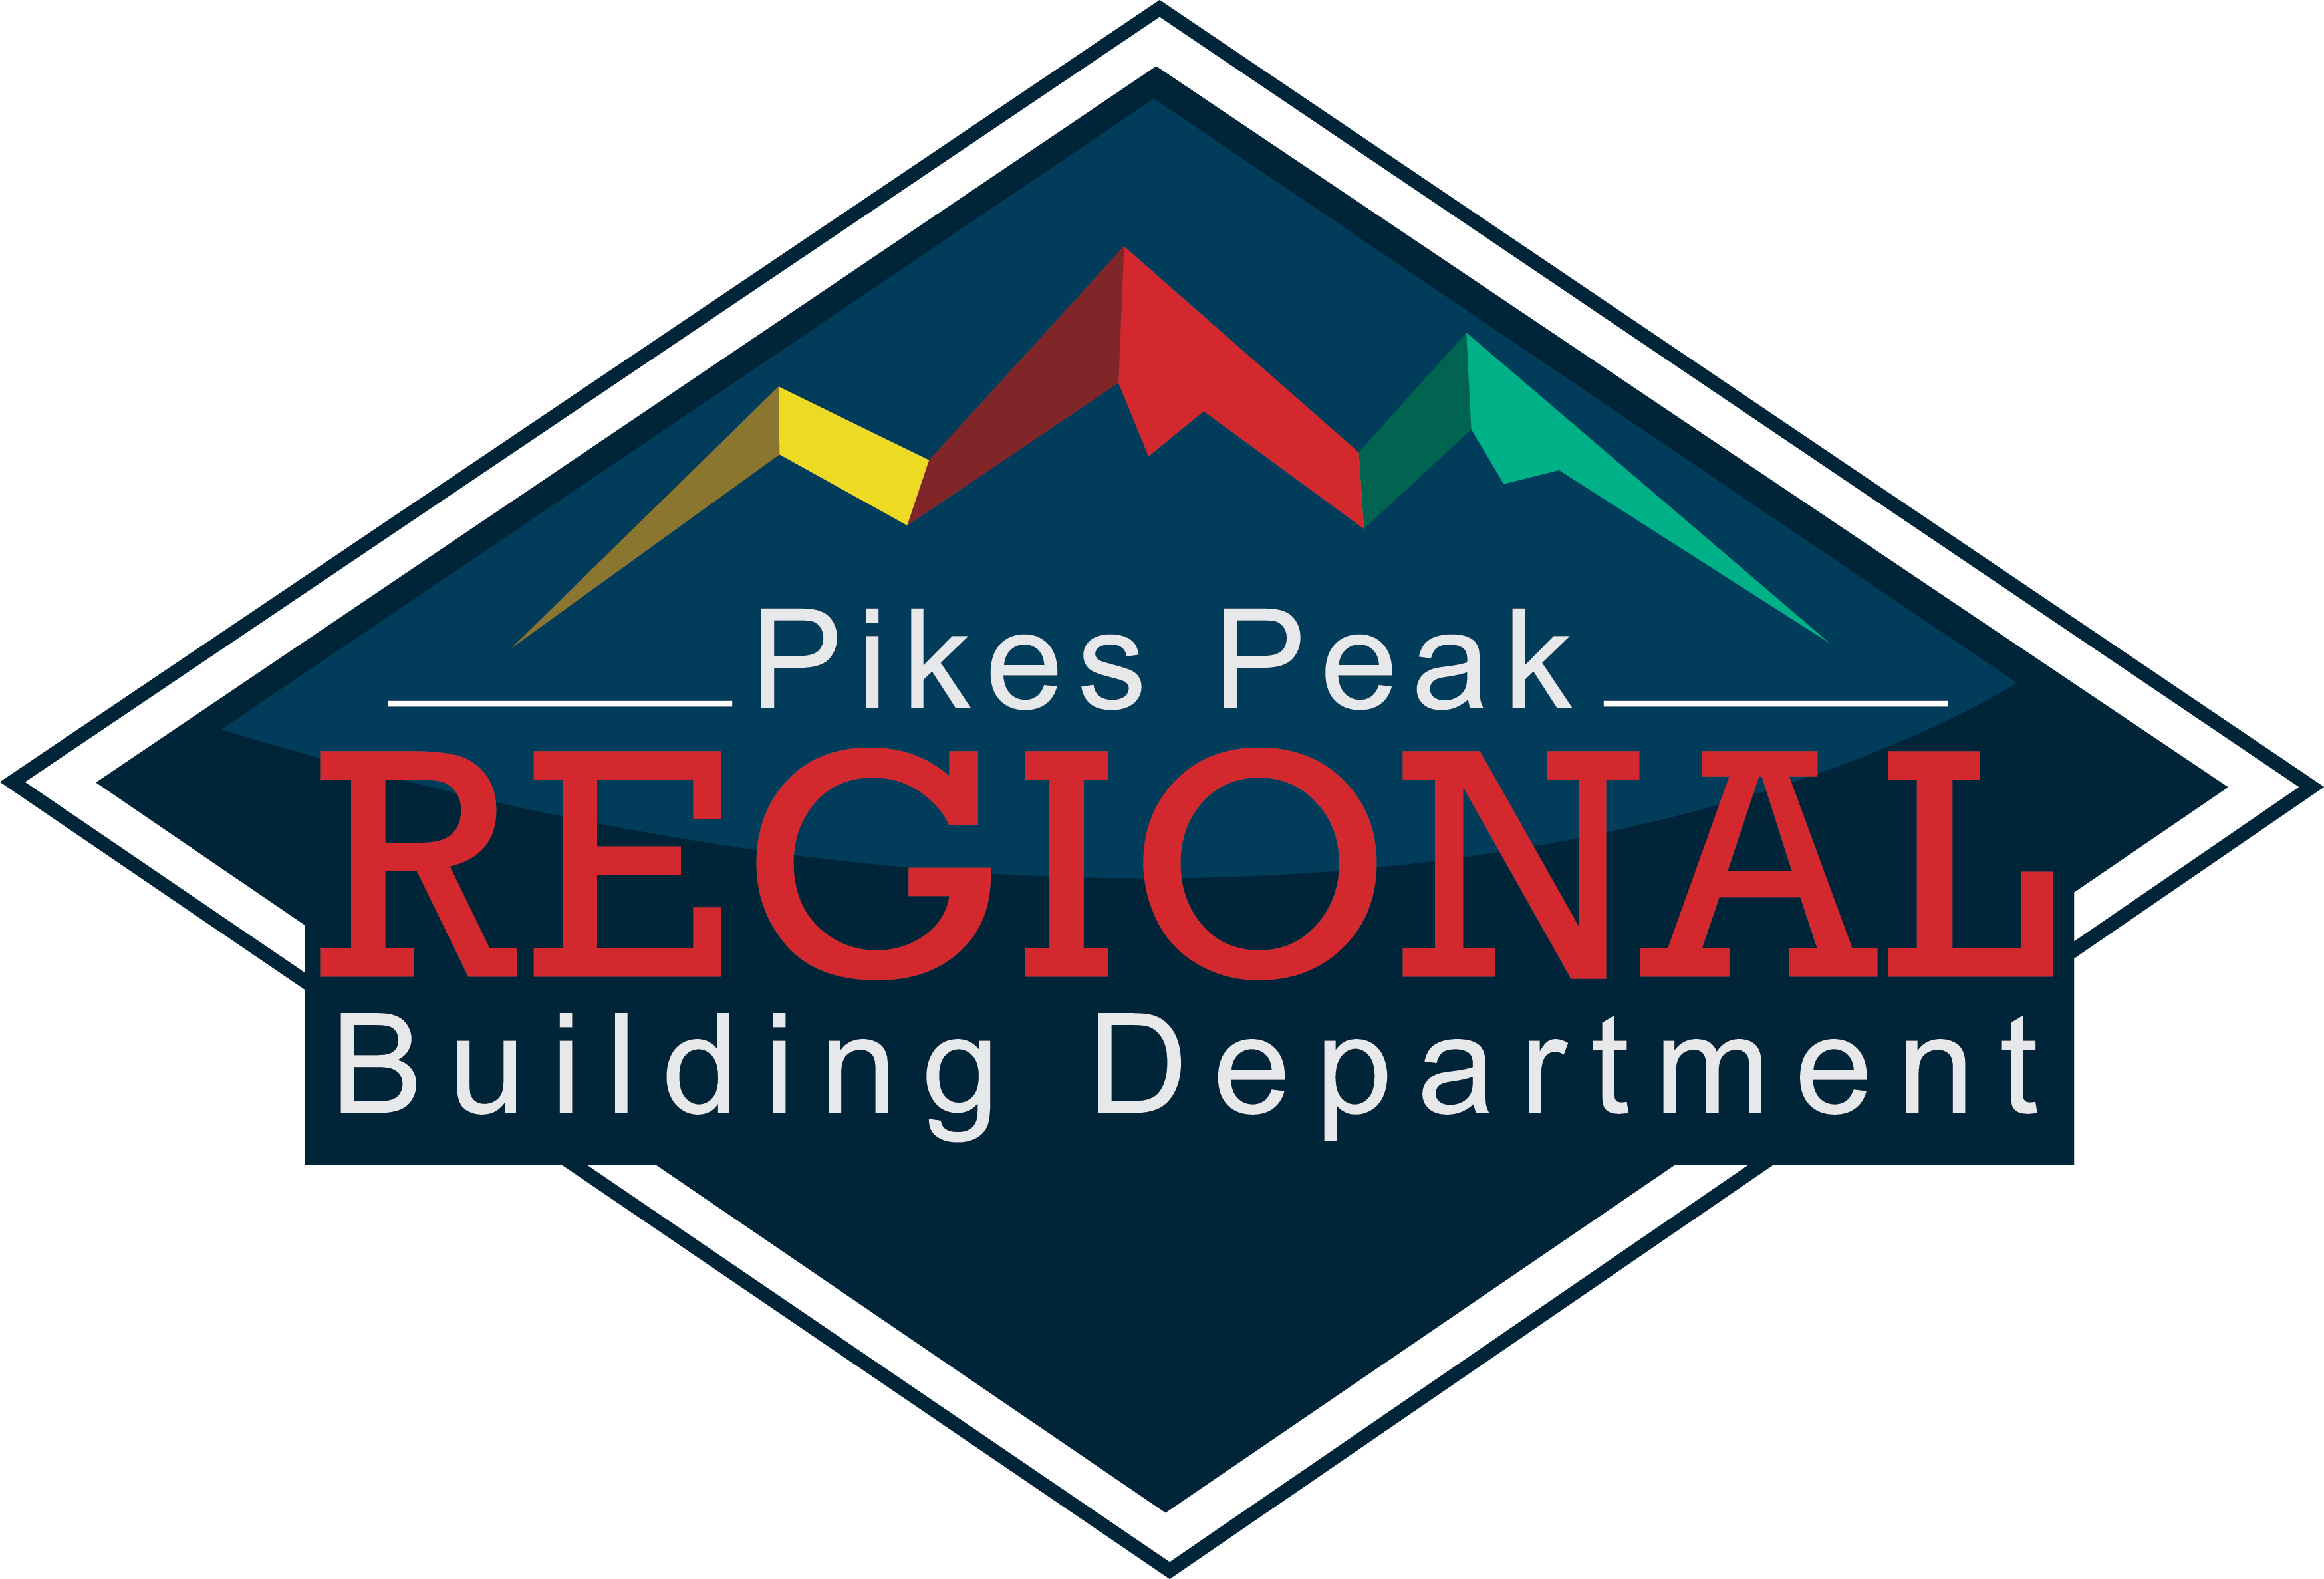 Pikes peak regional building department logo.